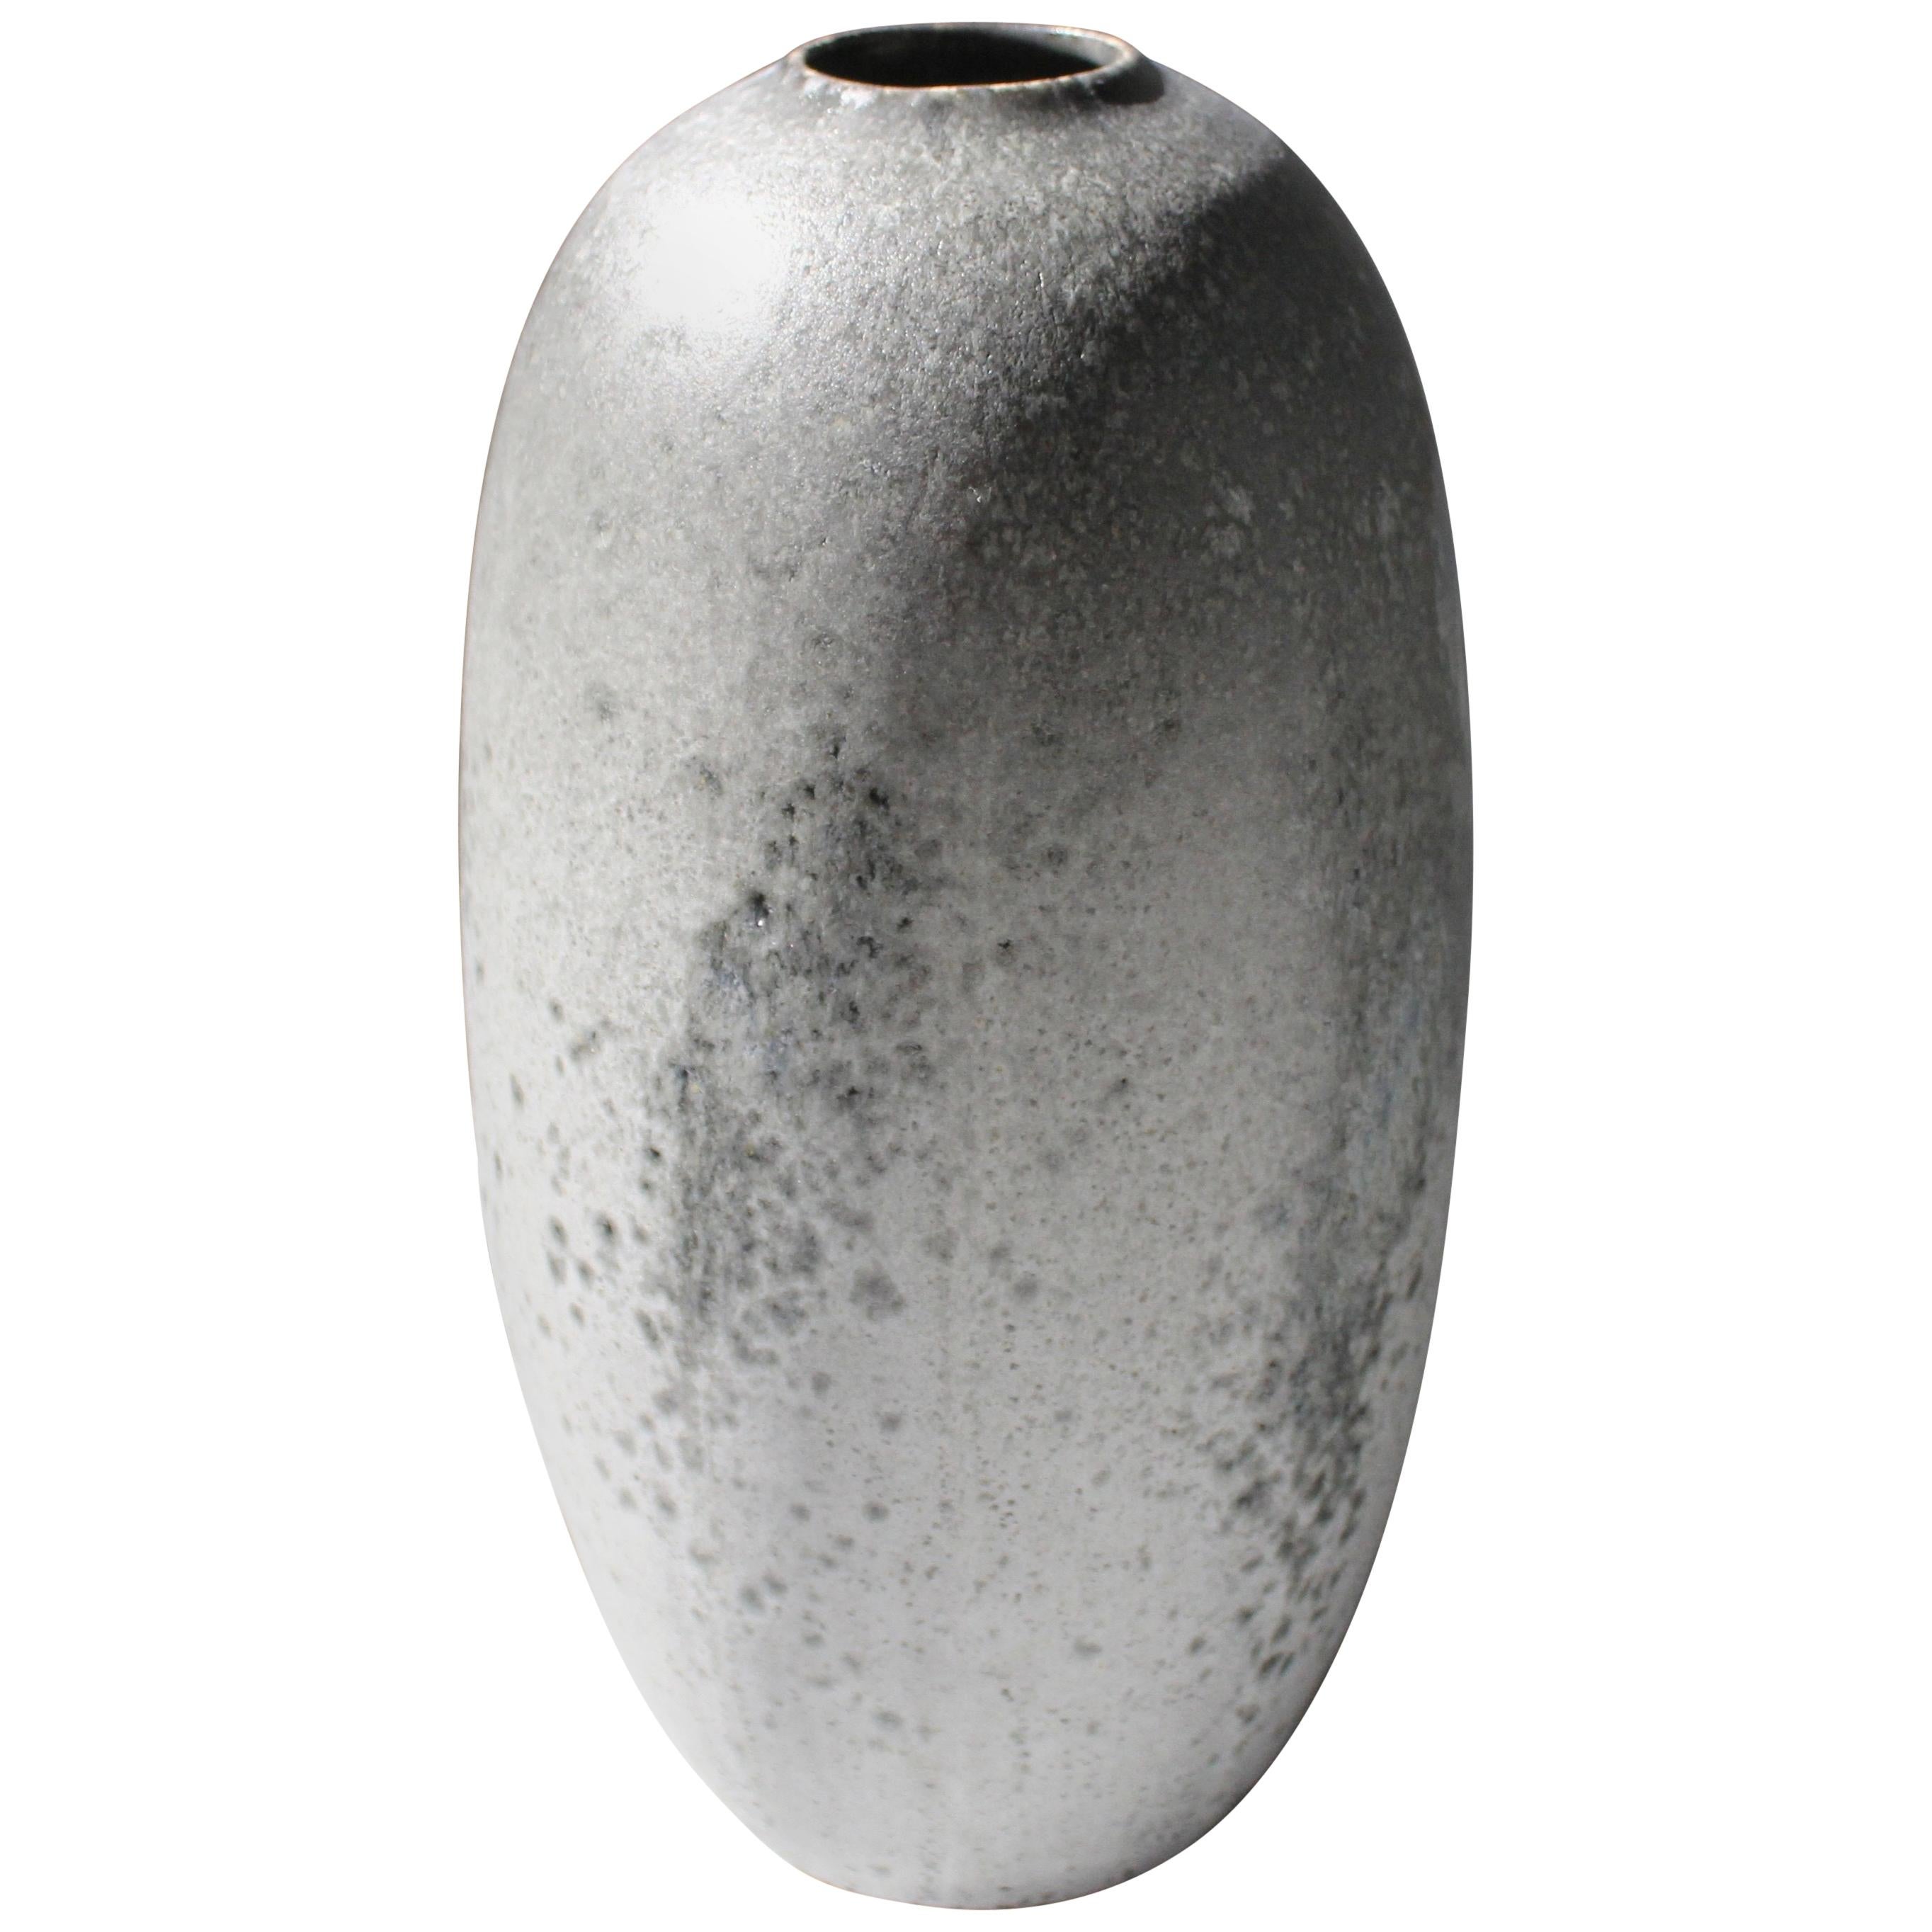 KH Würtz Tall Torpedo Shaped Vase in Granite Glaze